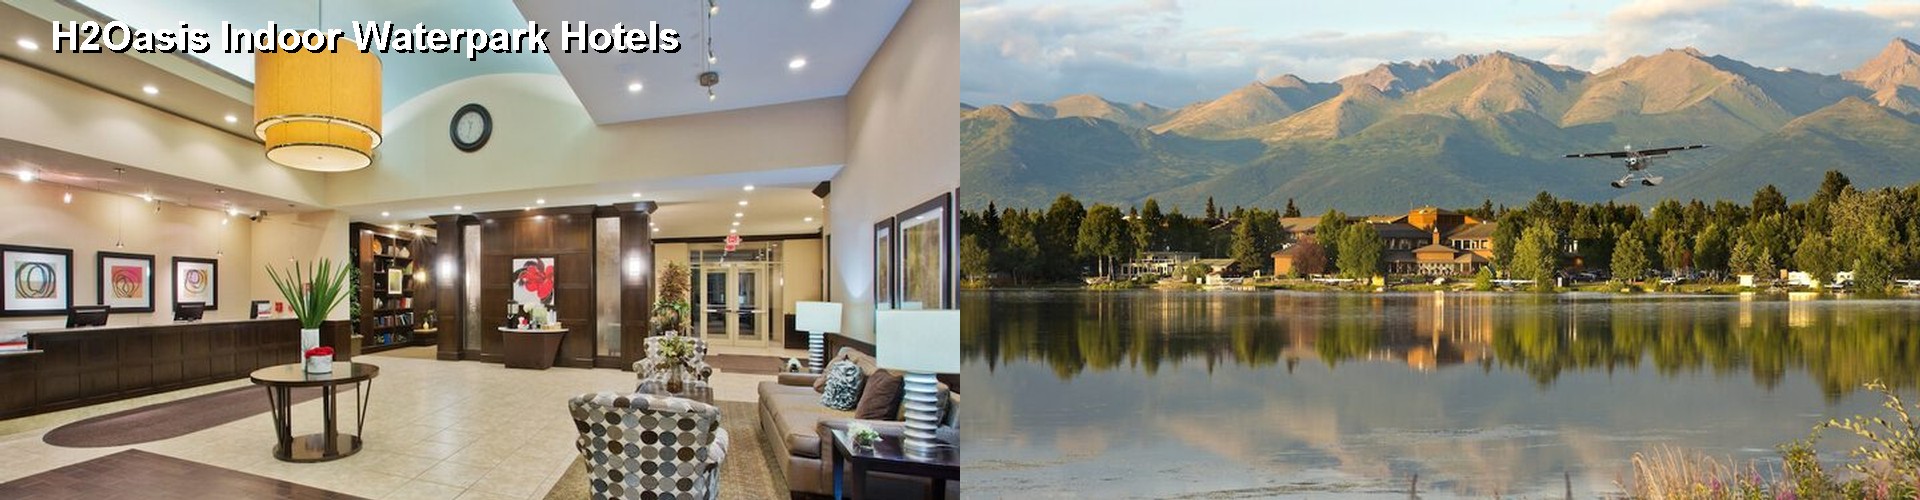 5 Best Hotels near H2Oasis Indoor Waterpark